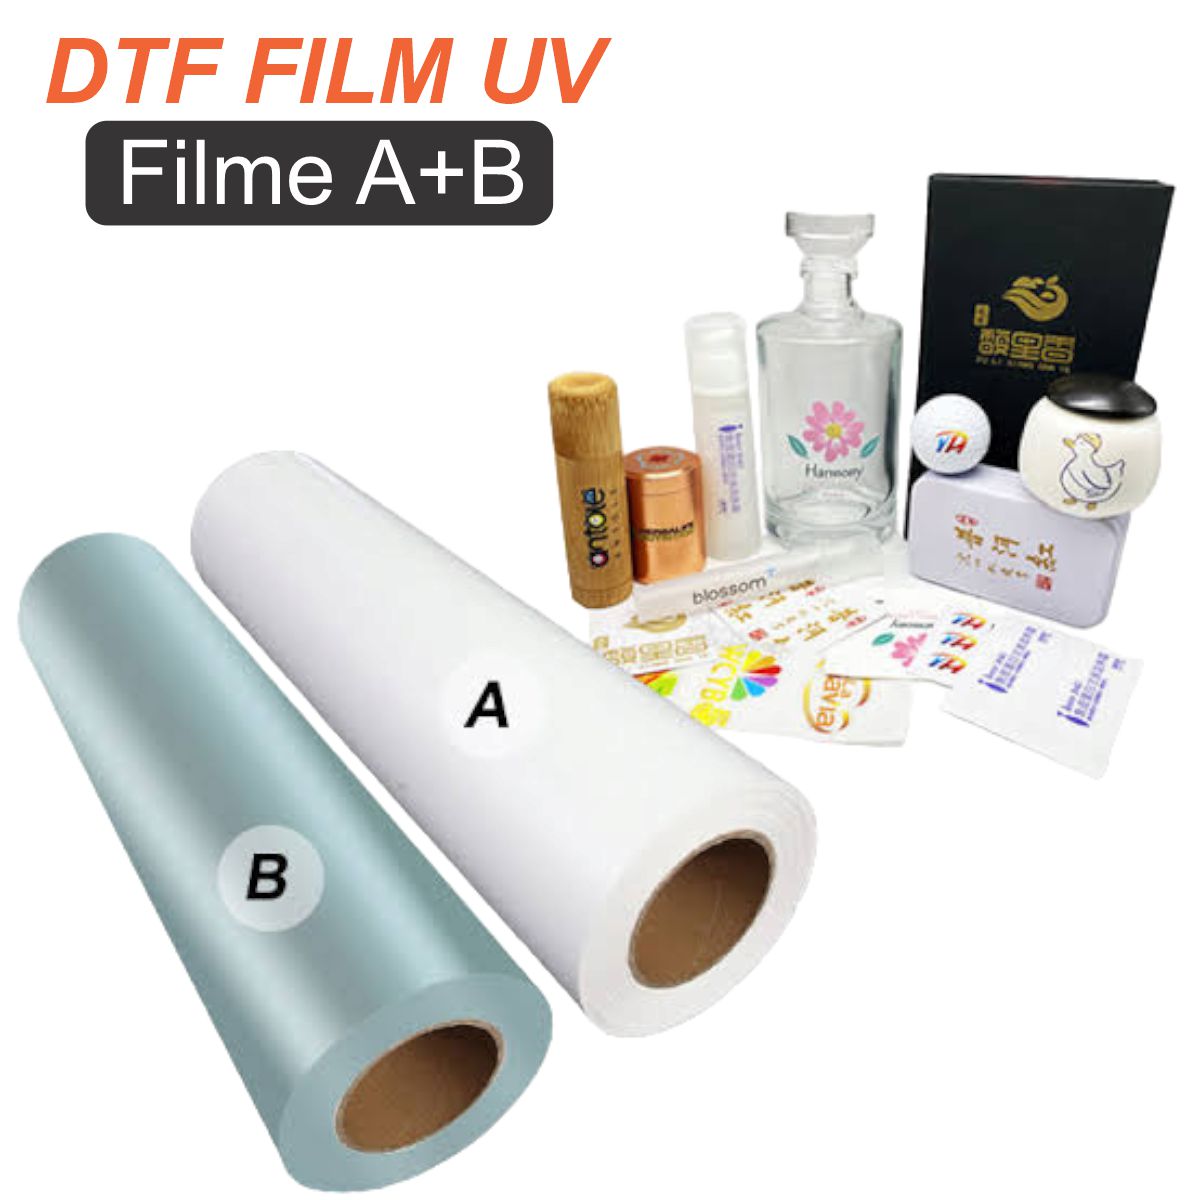 Filme Dtf UV A+B Adesivo Importado - 60 cm x 10 mt